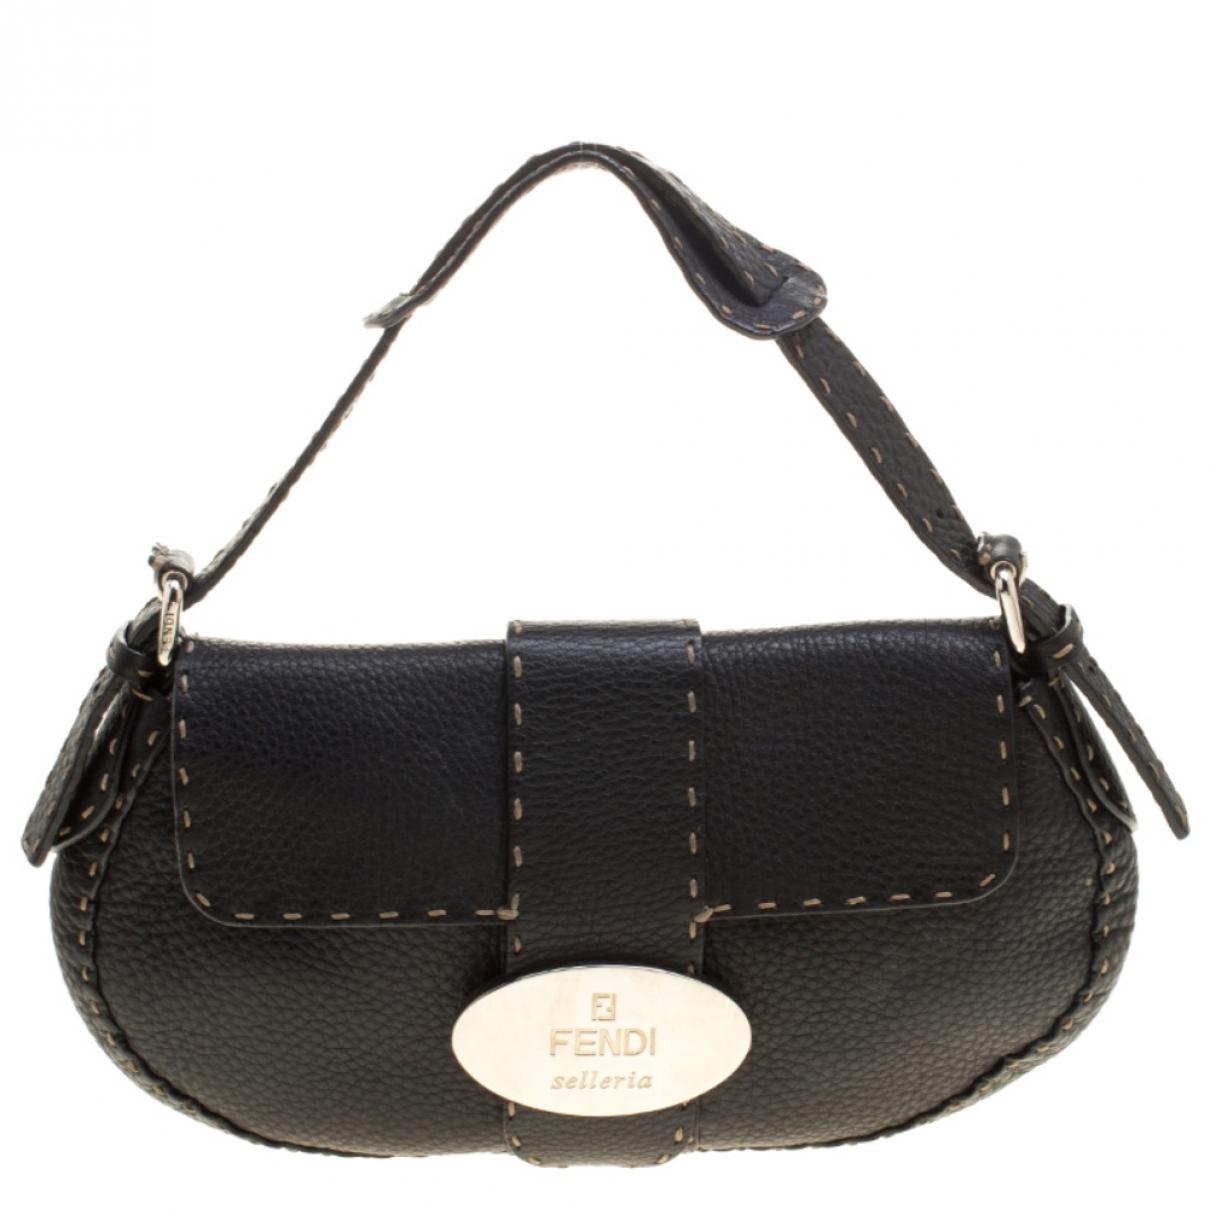 Lyst - Fendi Pre-owned Black Leather Handbags in Black